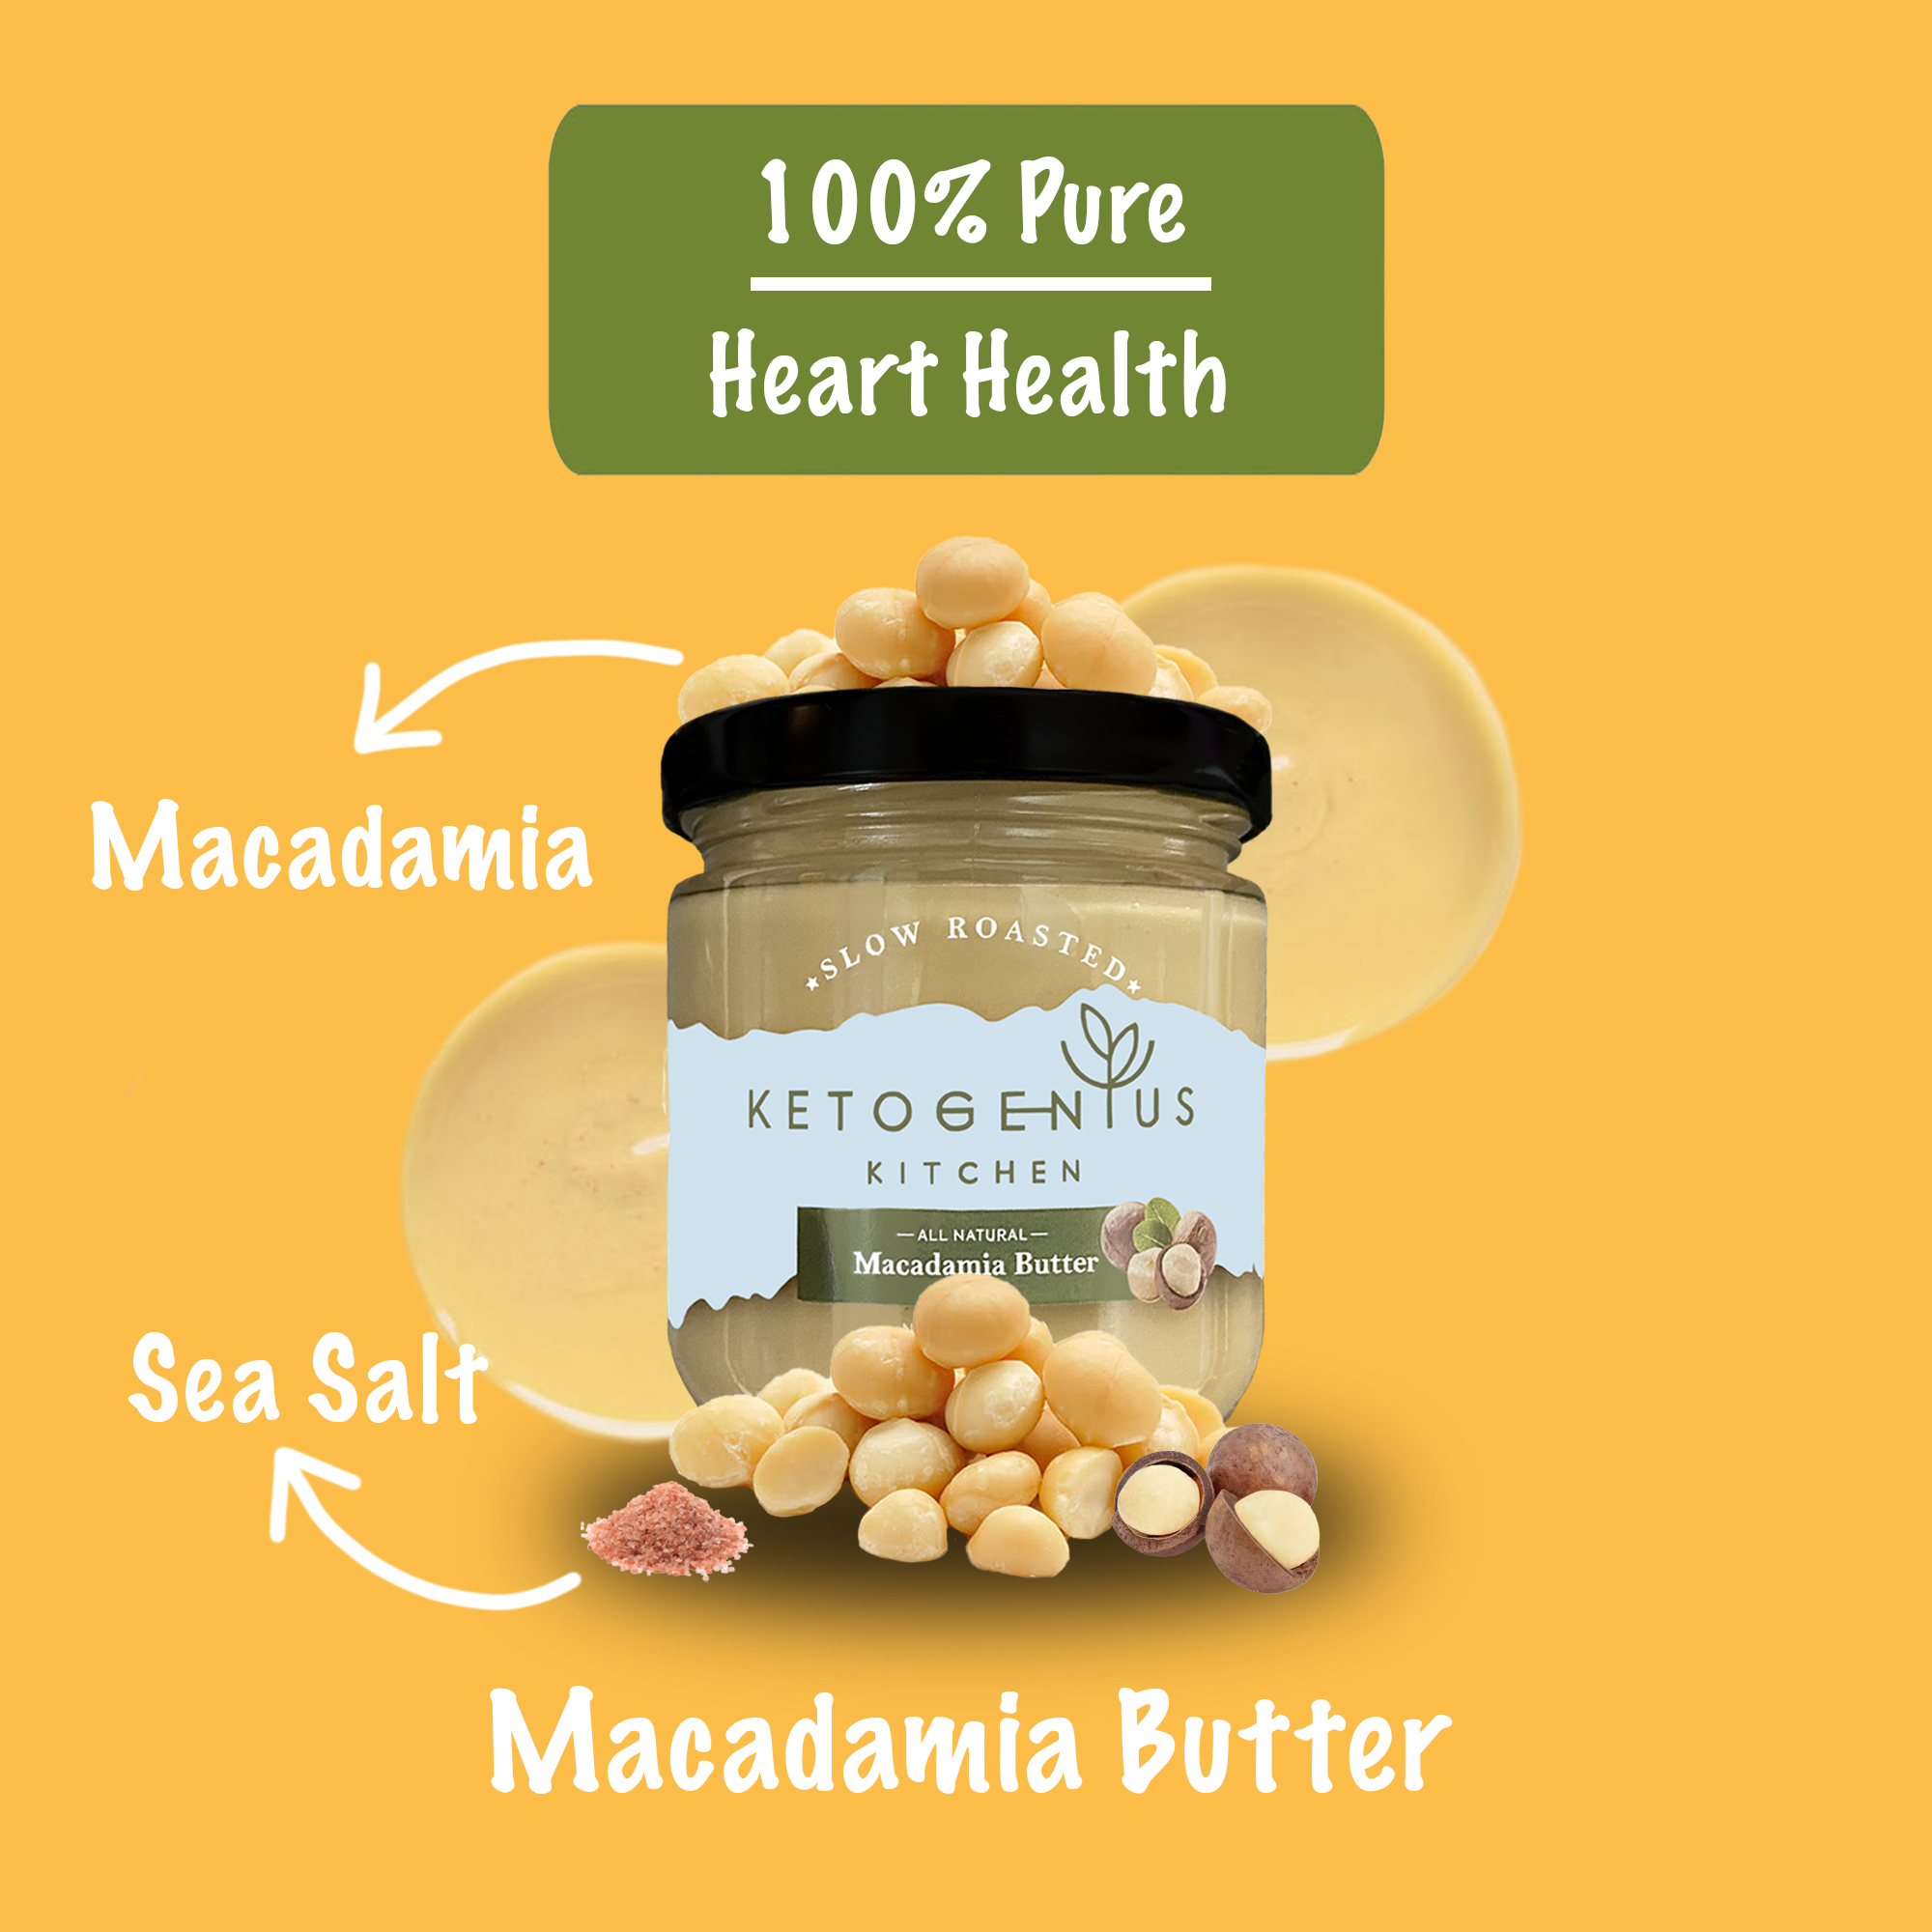 Macadamia nut butter